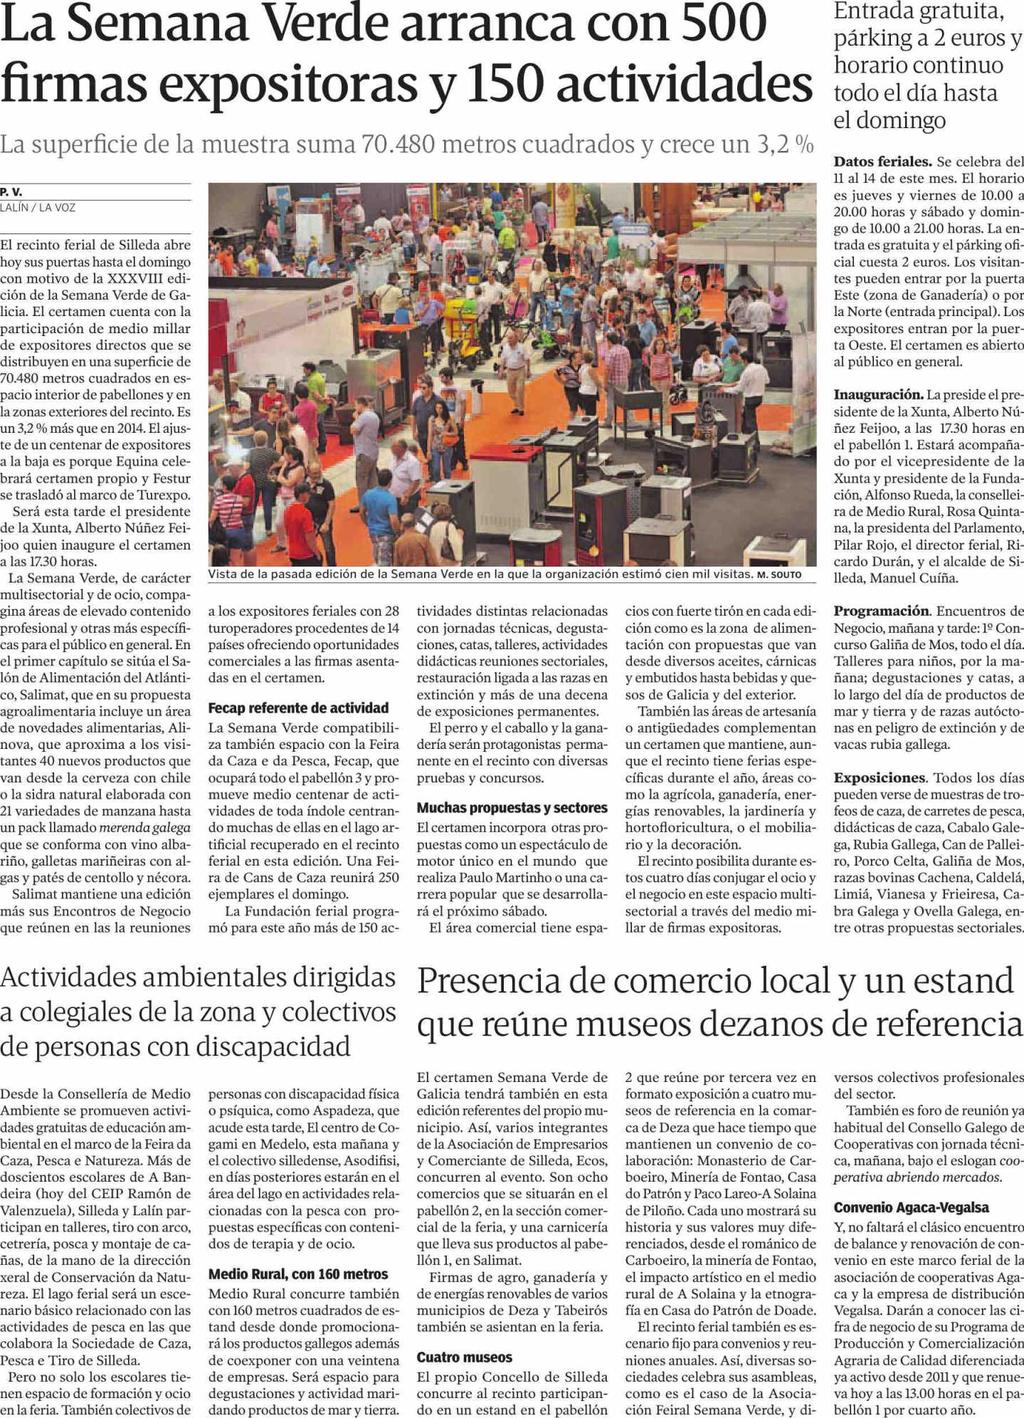 La Voz de Galícia (Deza y Tabeiros) Pontevedra Prensa: Tirada: